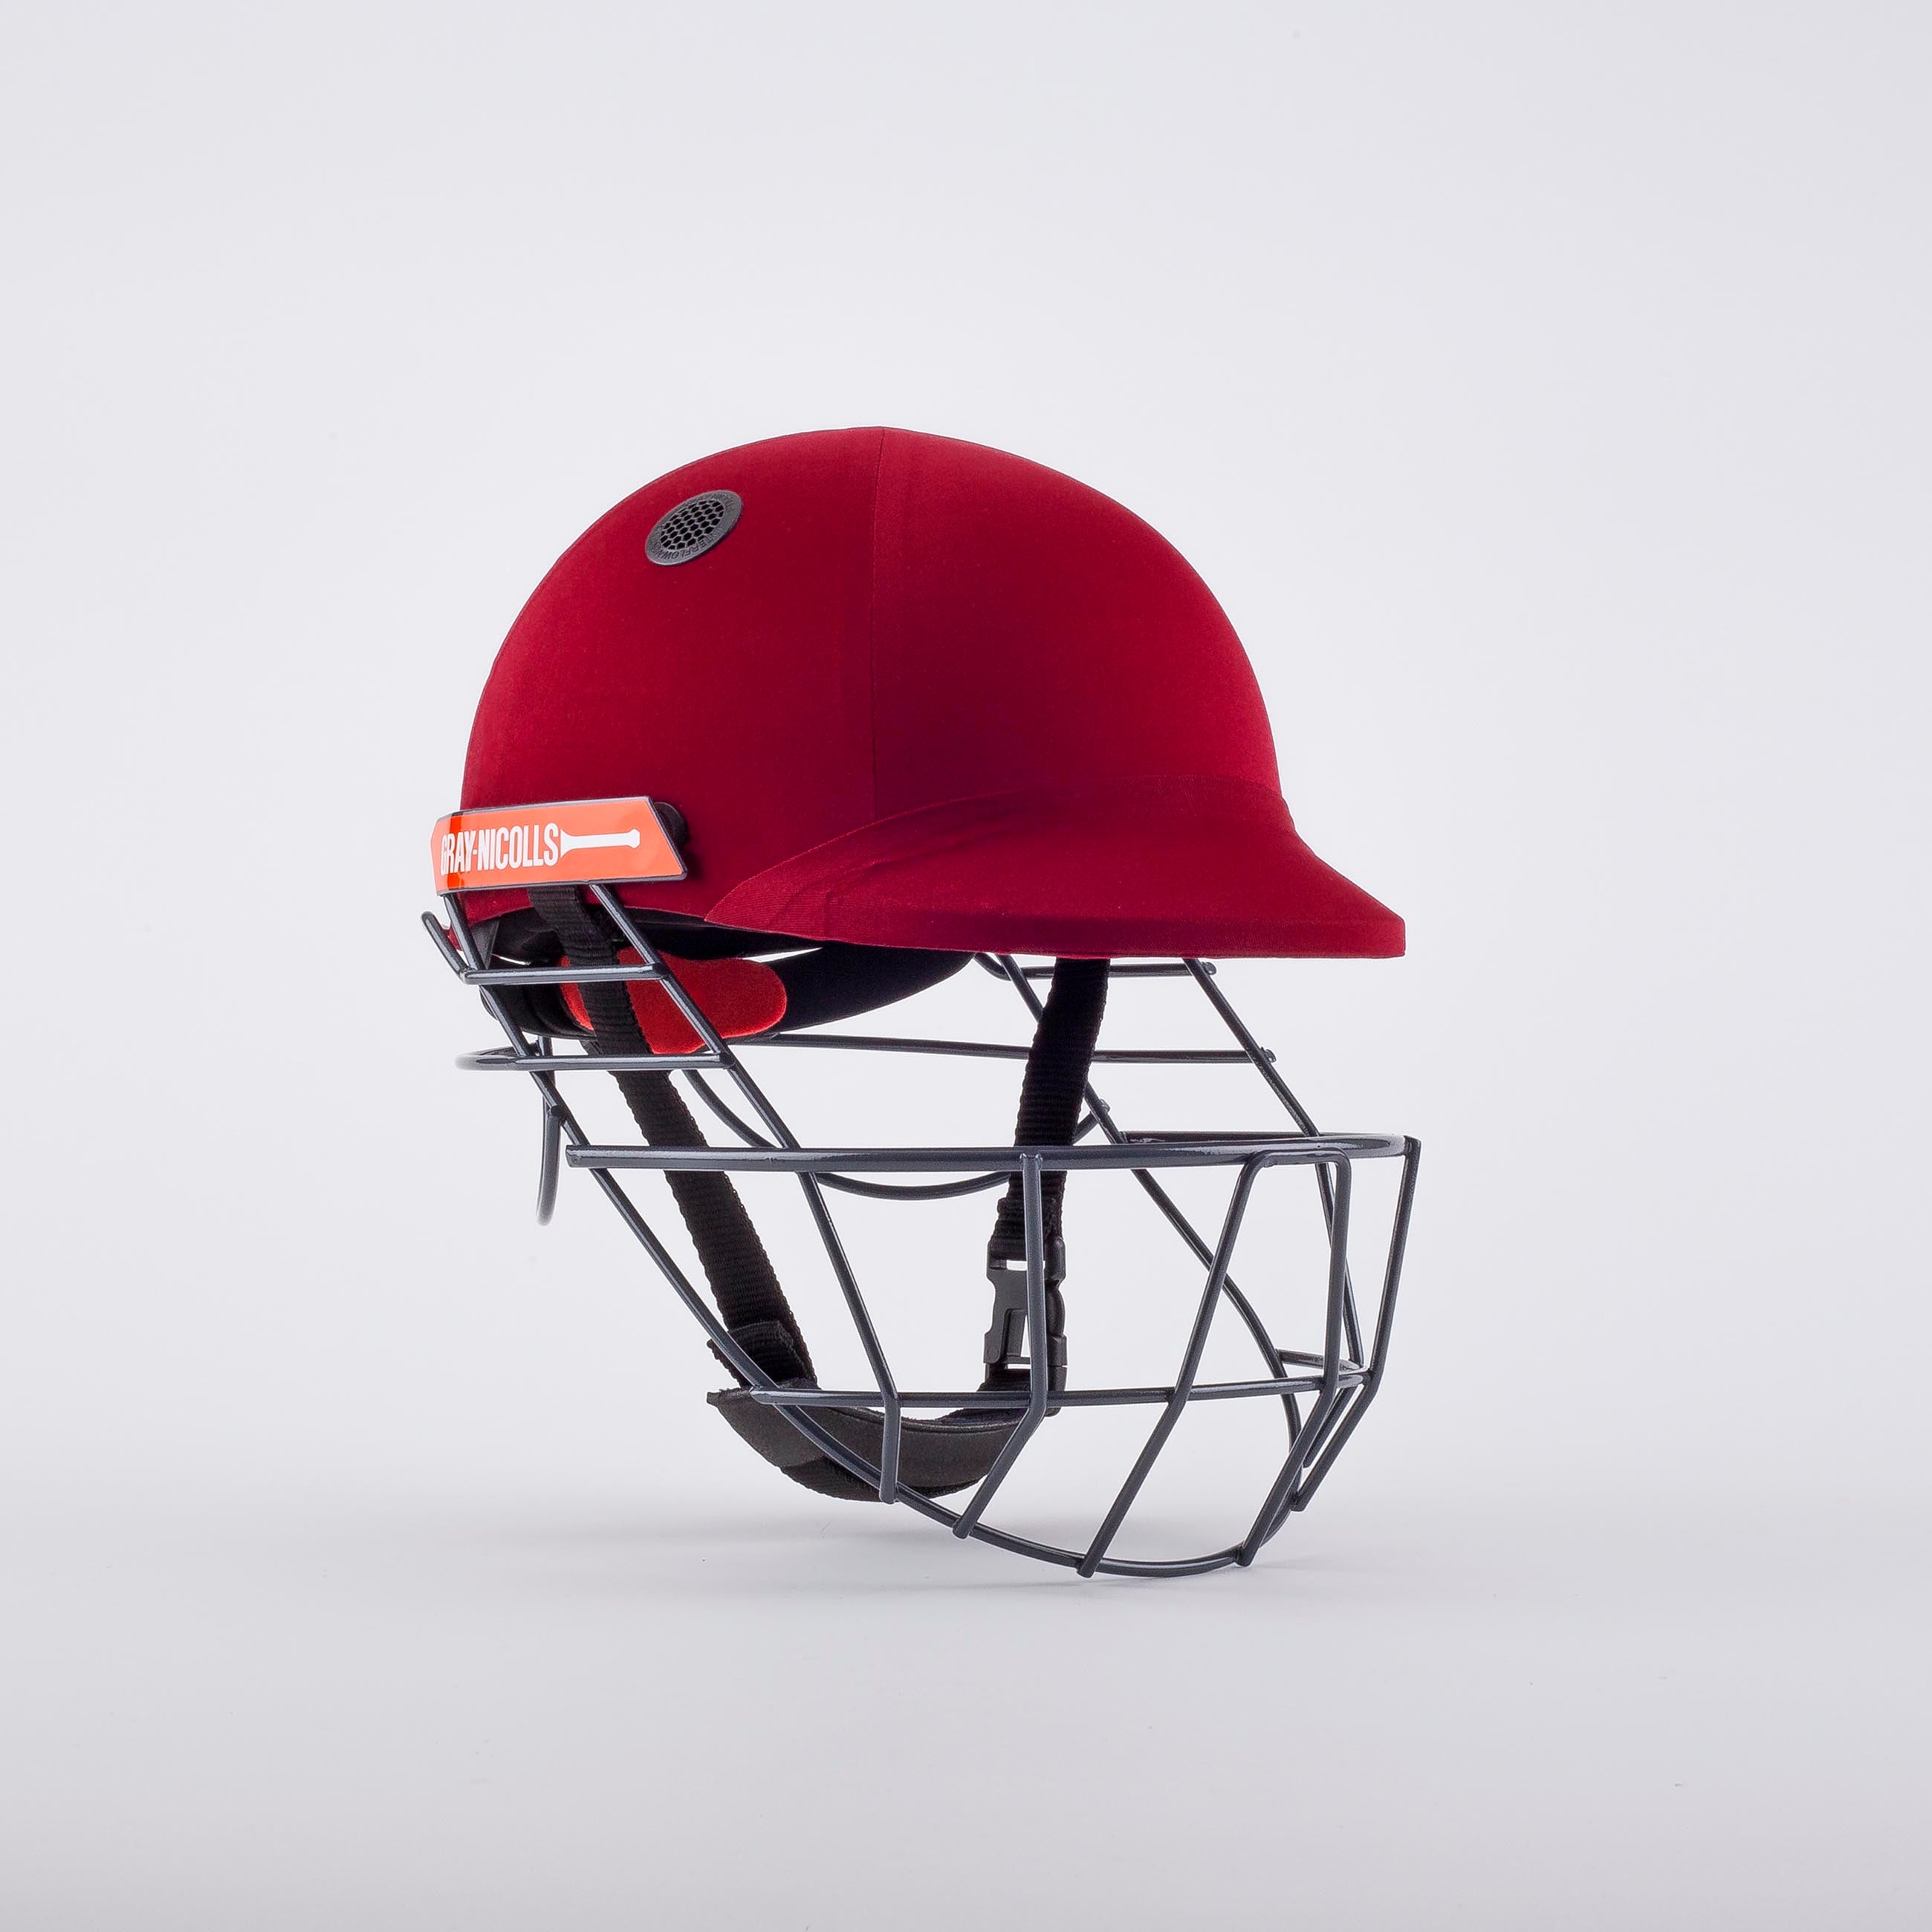 Atomic 360 Cricket Helmet Senior